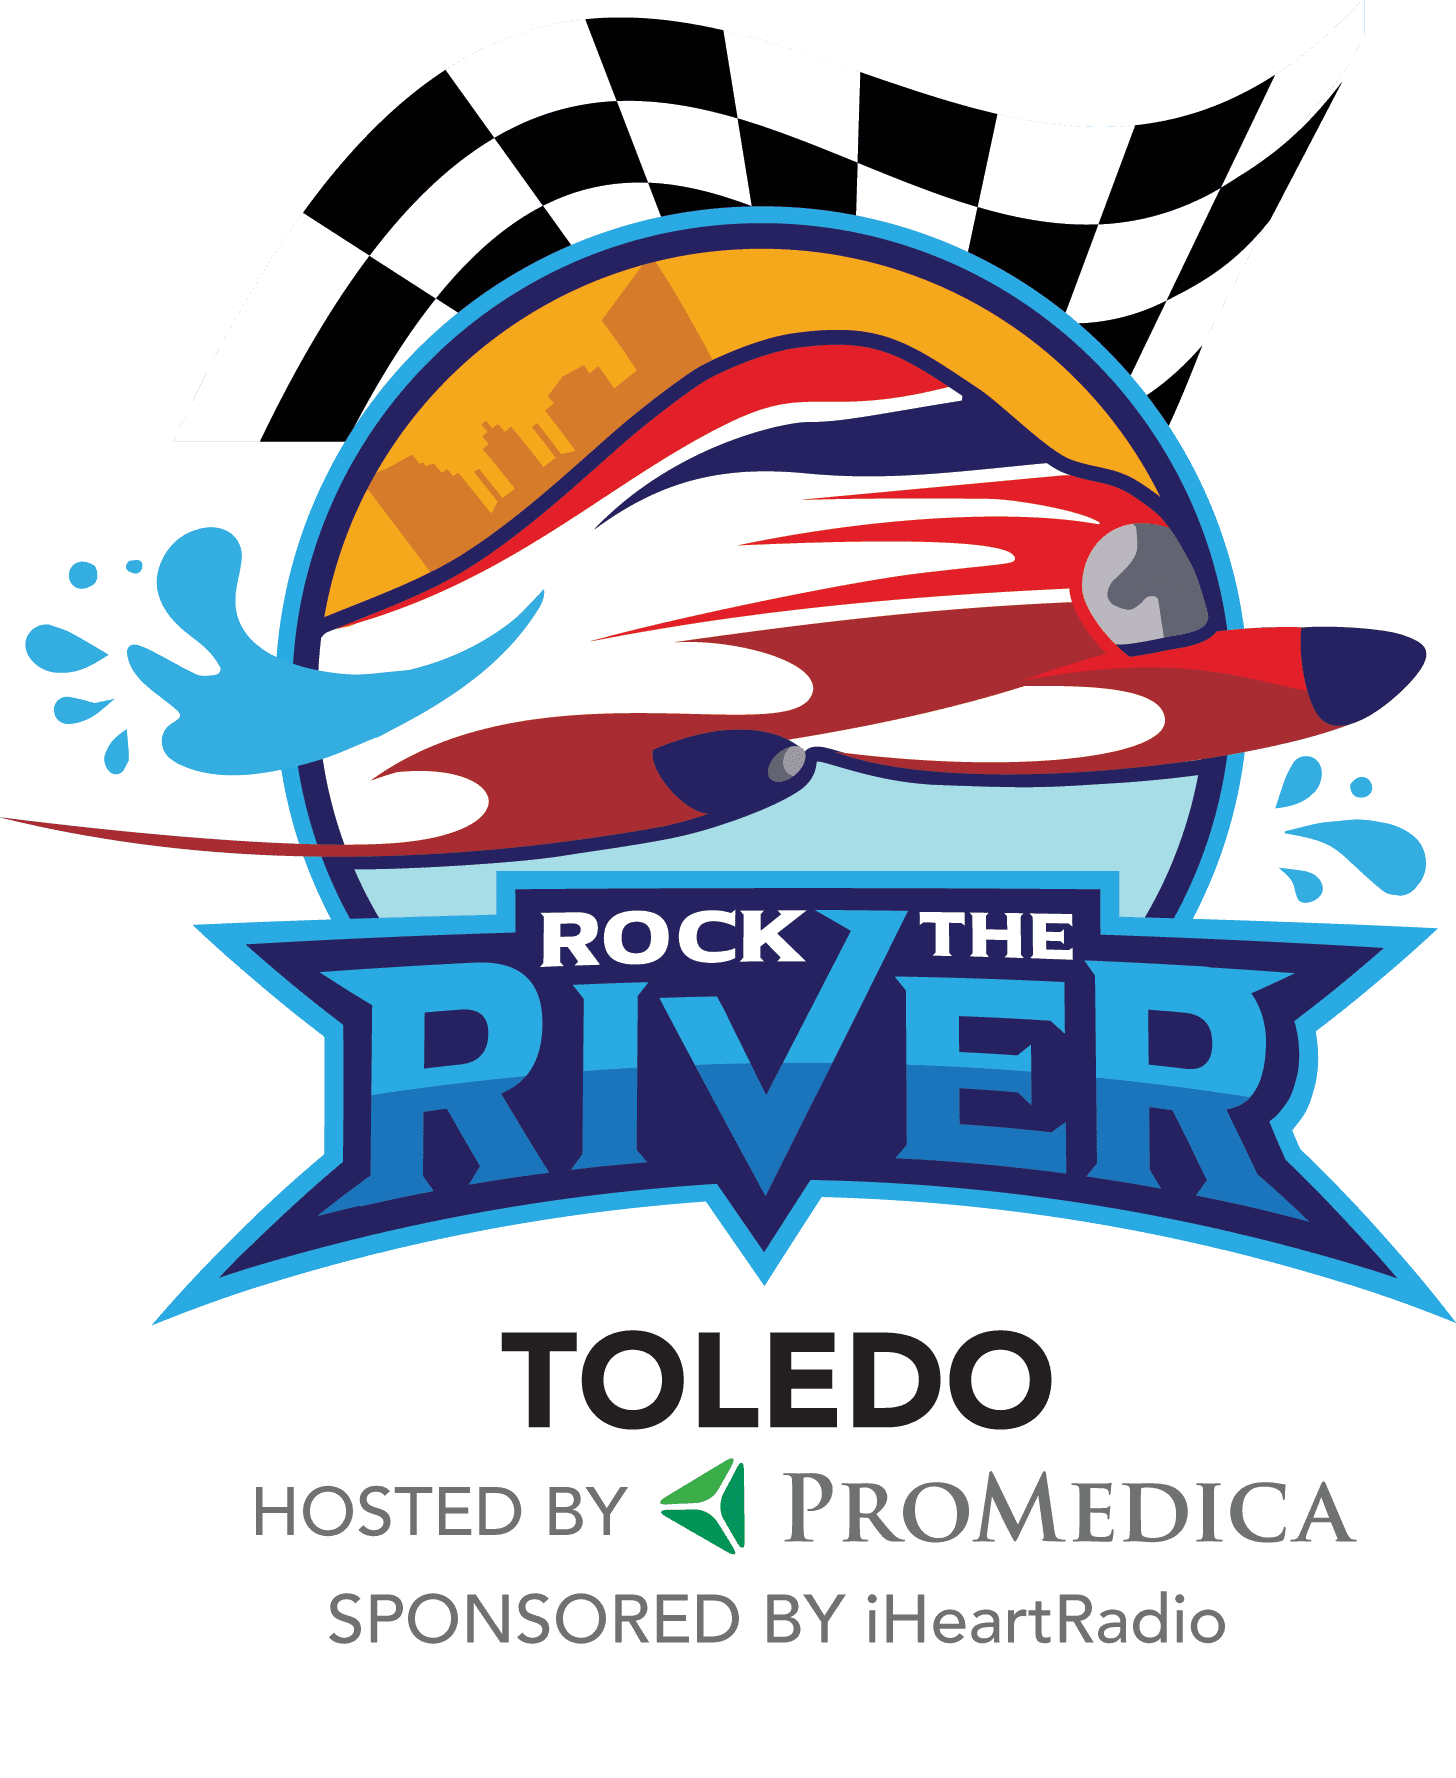 Rock the river logo